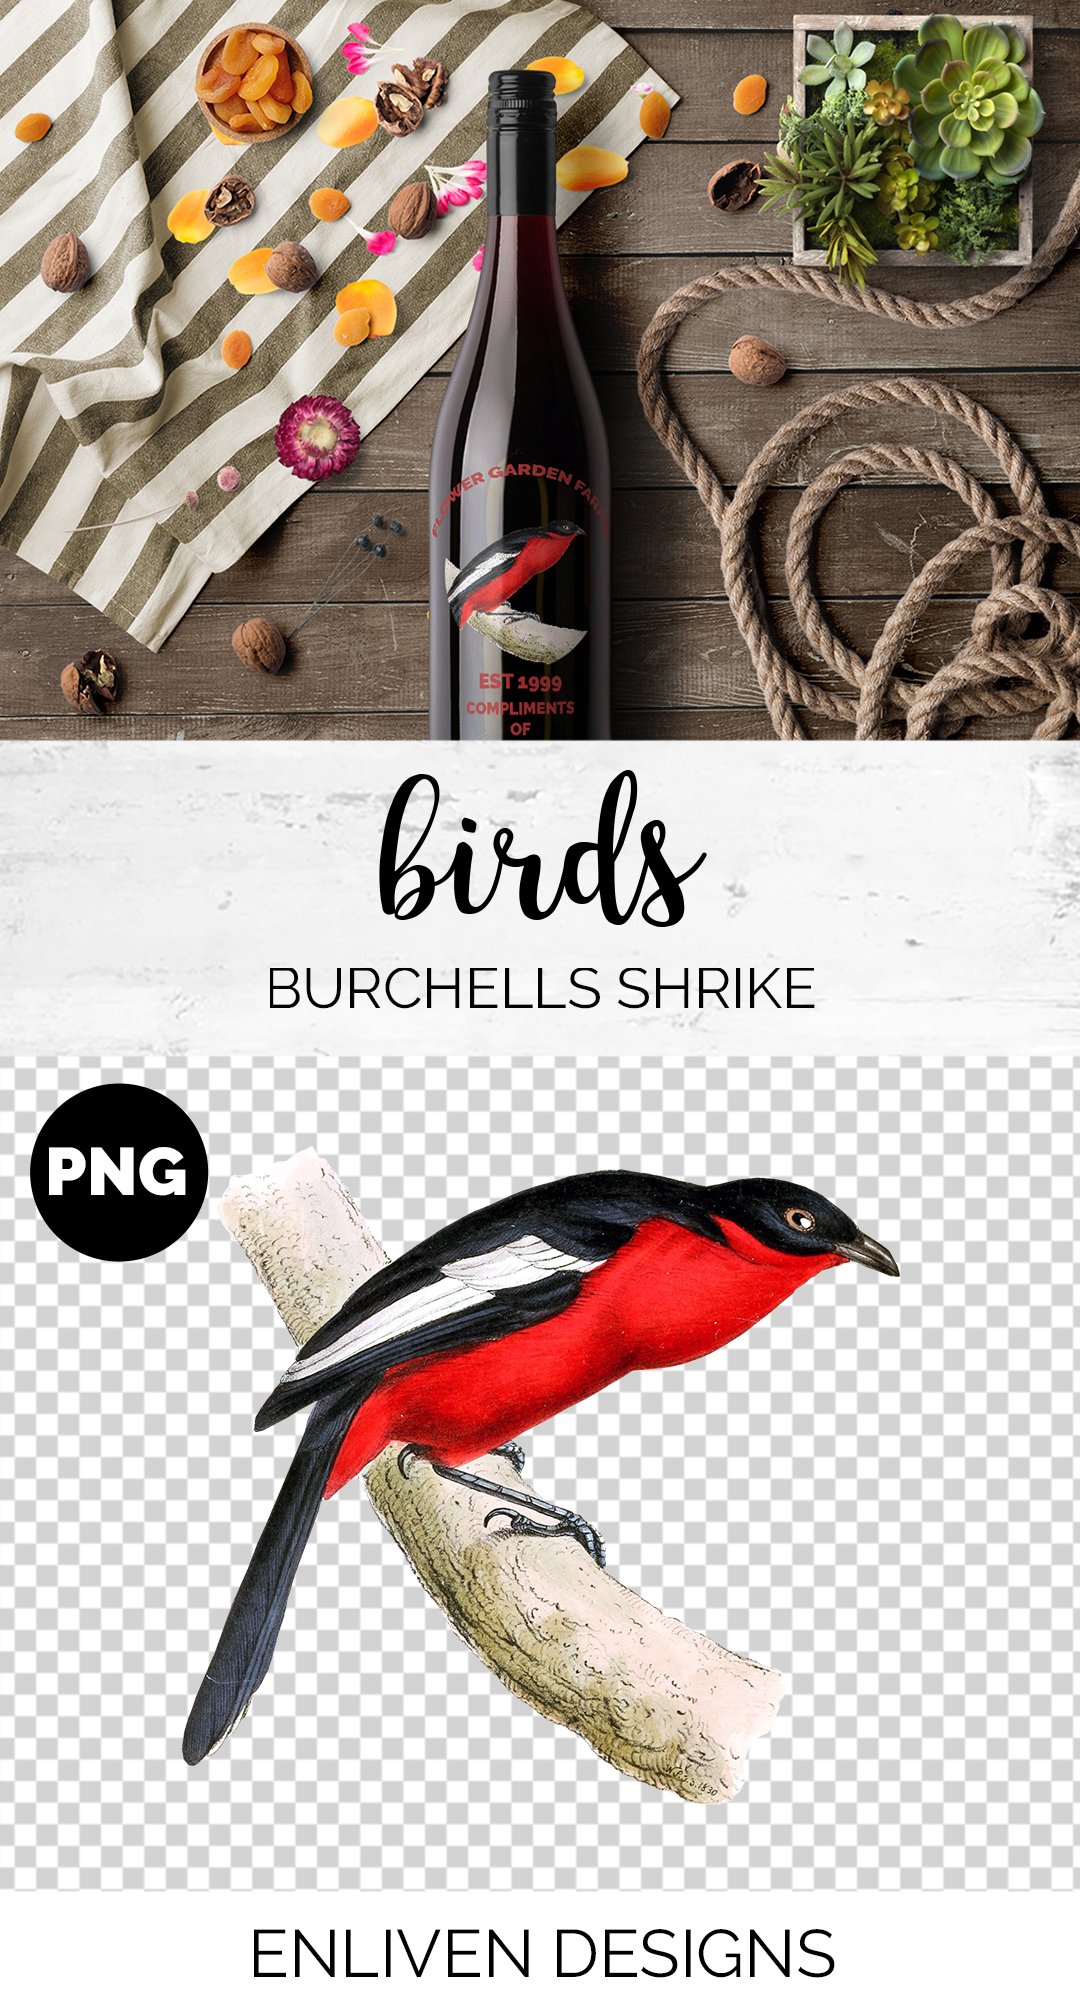 Red Bird Burchells Shrike  Vintage preview image.